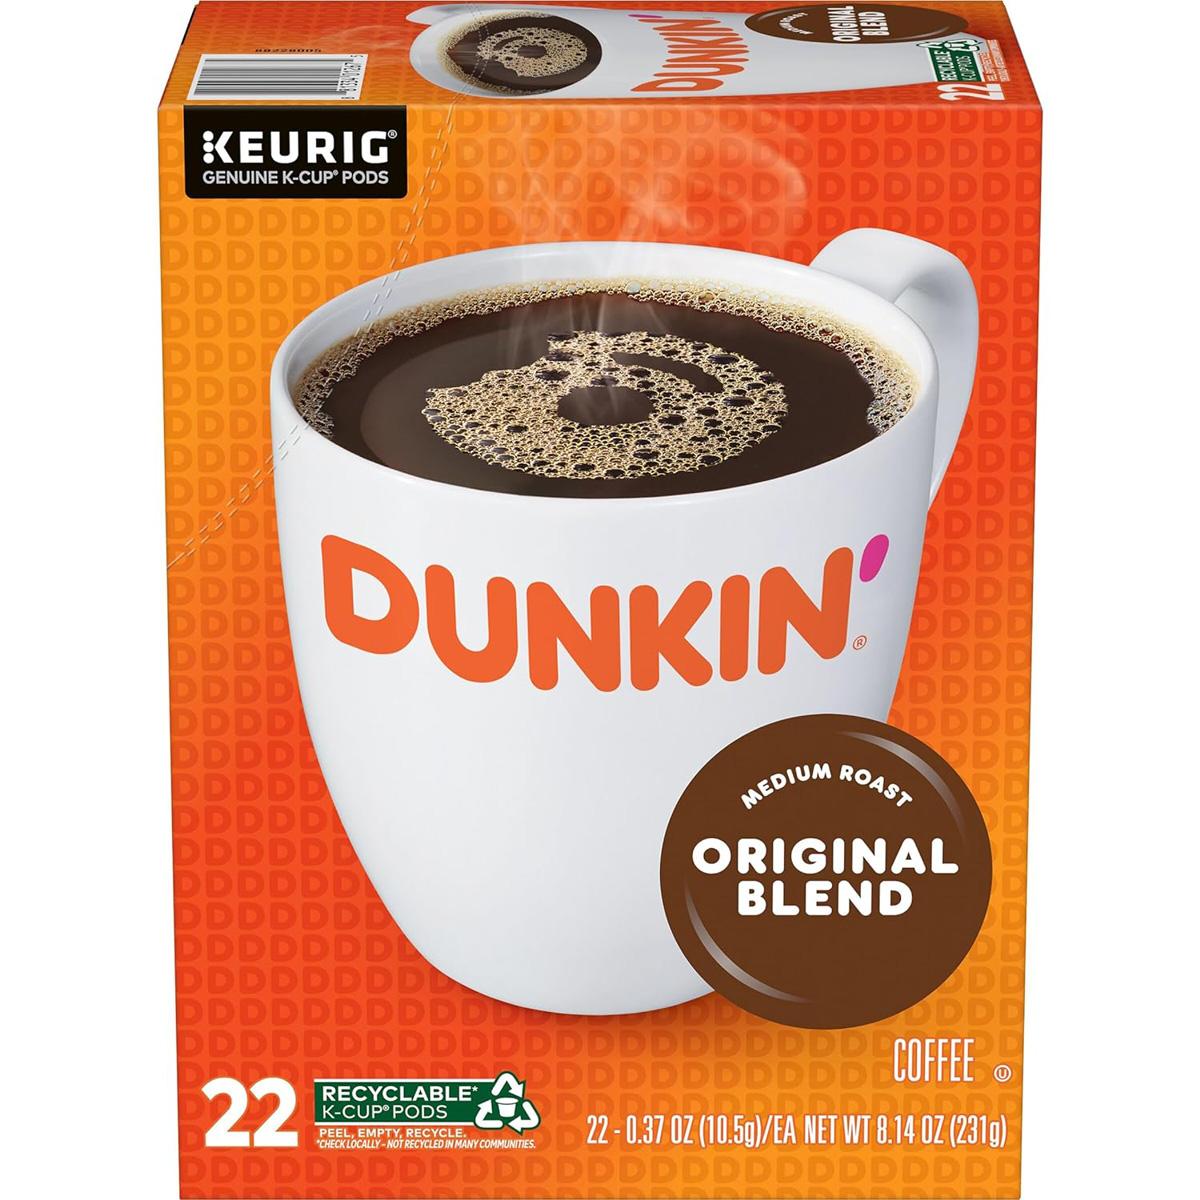 Keurig K-Cup Pods Dunkin Original Blend Medium Roast Coffee 88 Pack for $26.24